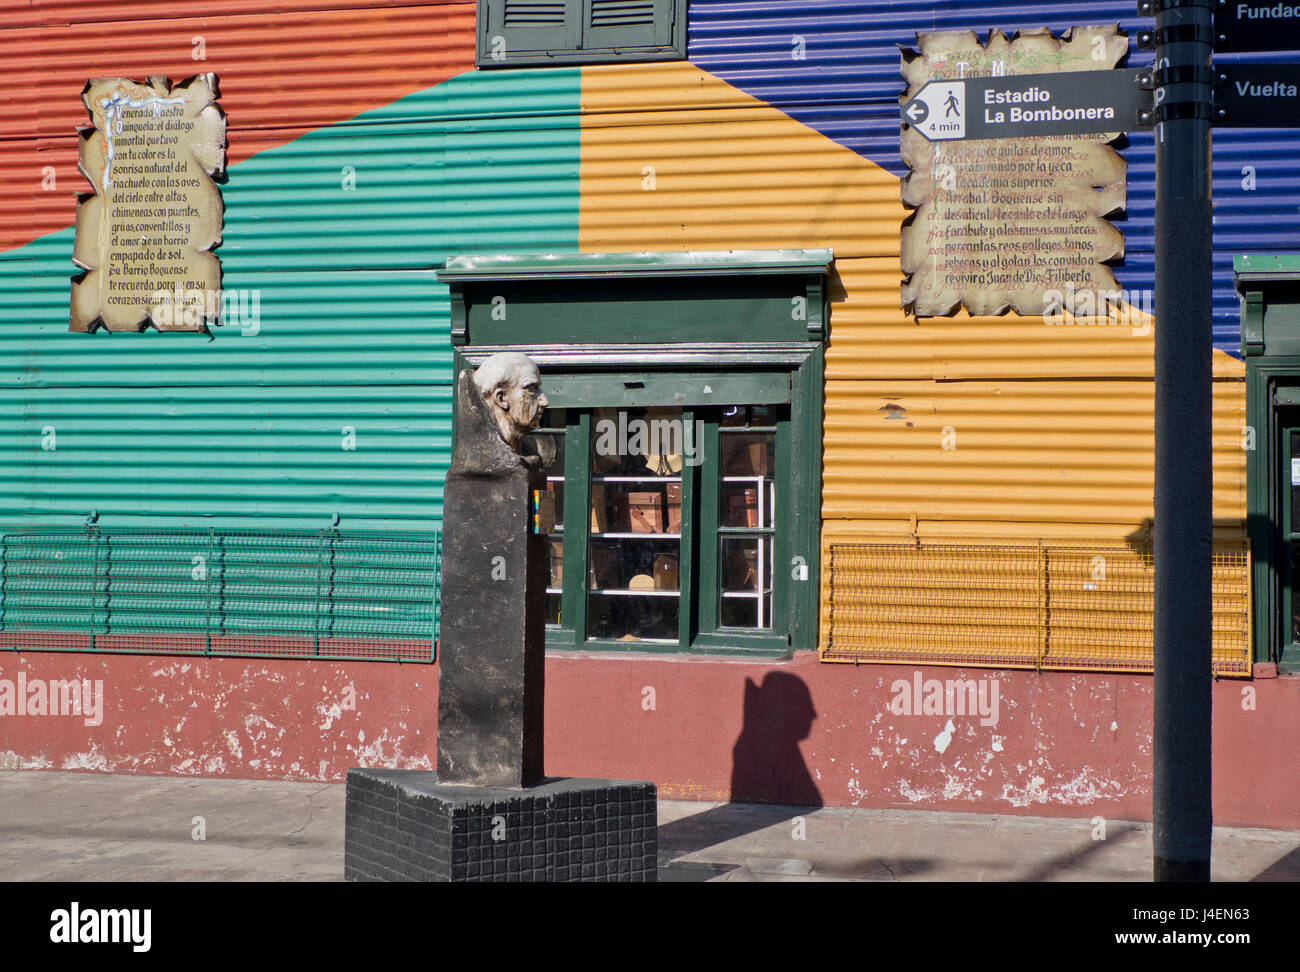 Statue du célèbre peintre local Quinquela Martin à Caminito ruelle de la Boca, ancien quartier italien de Buenos Aires, Argentine Banque D'Images